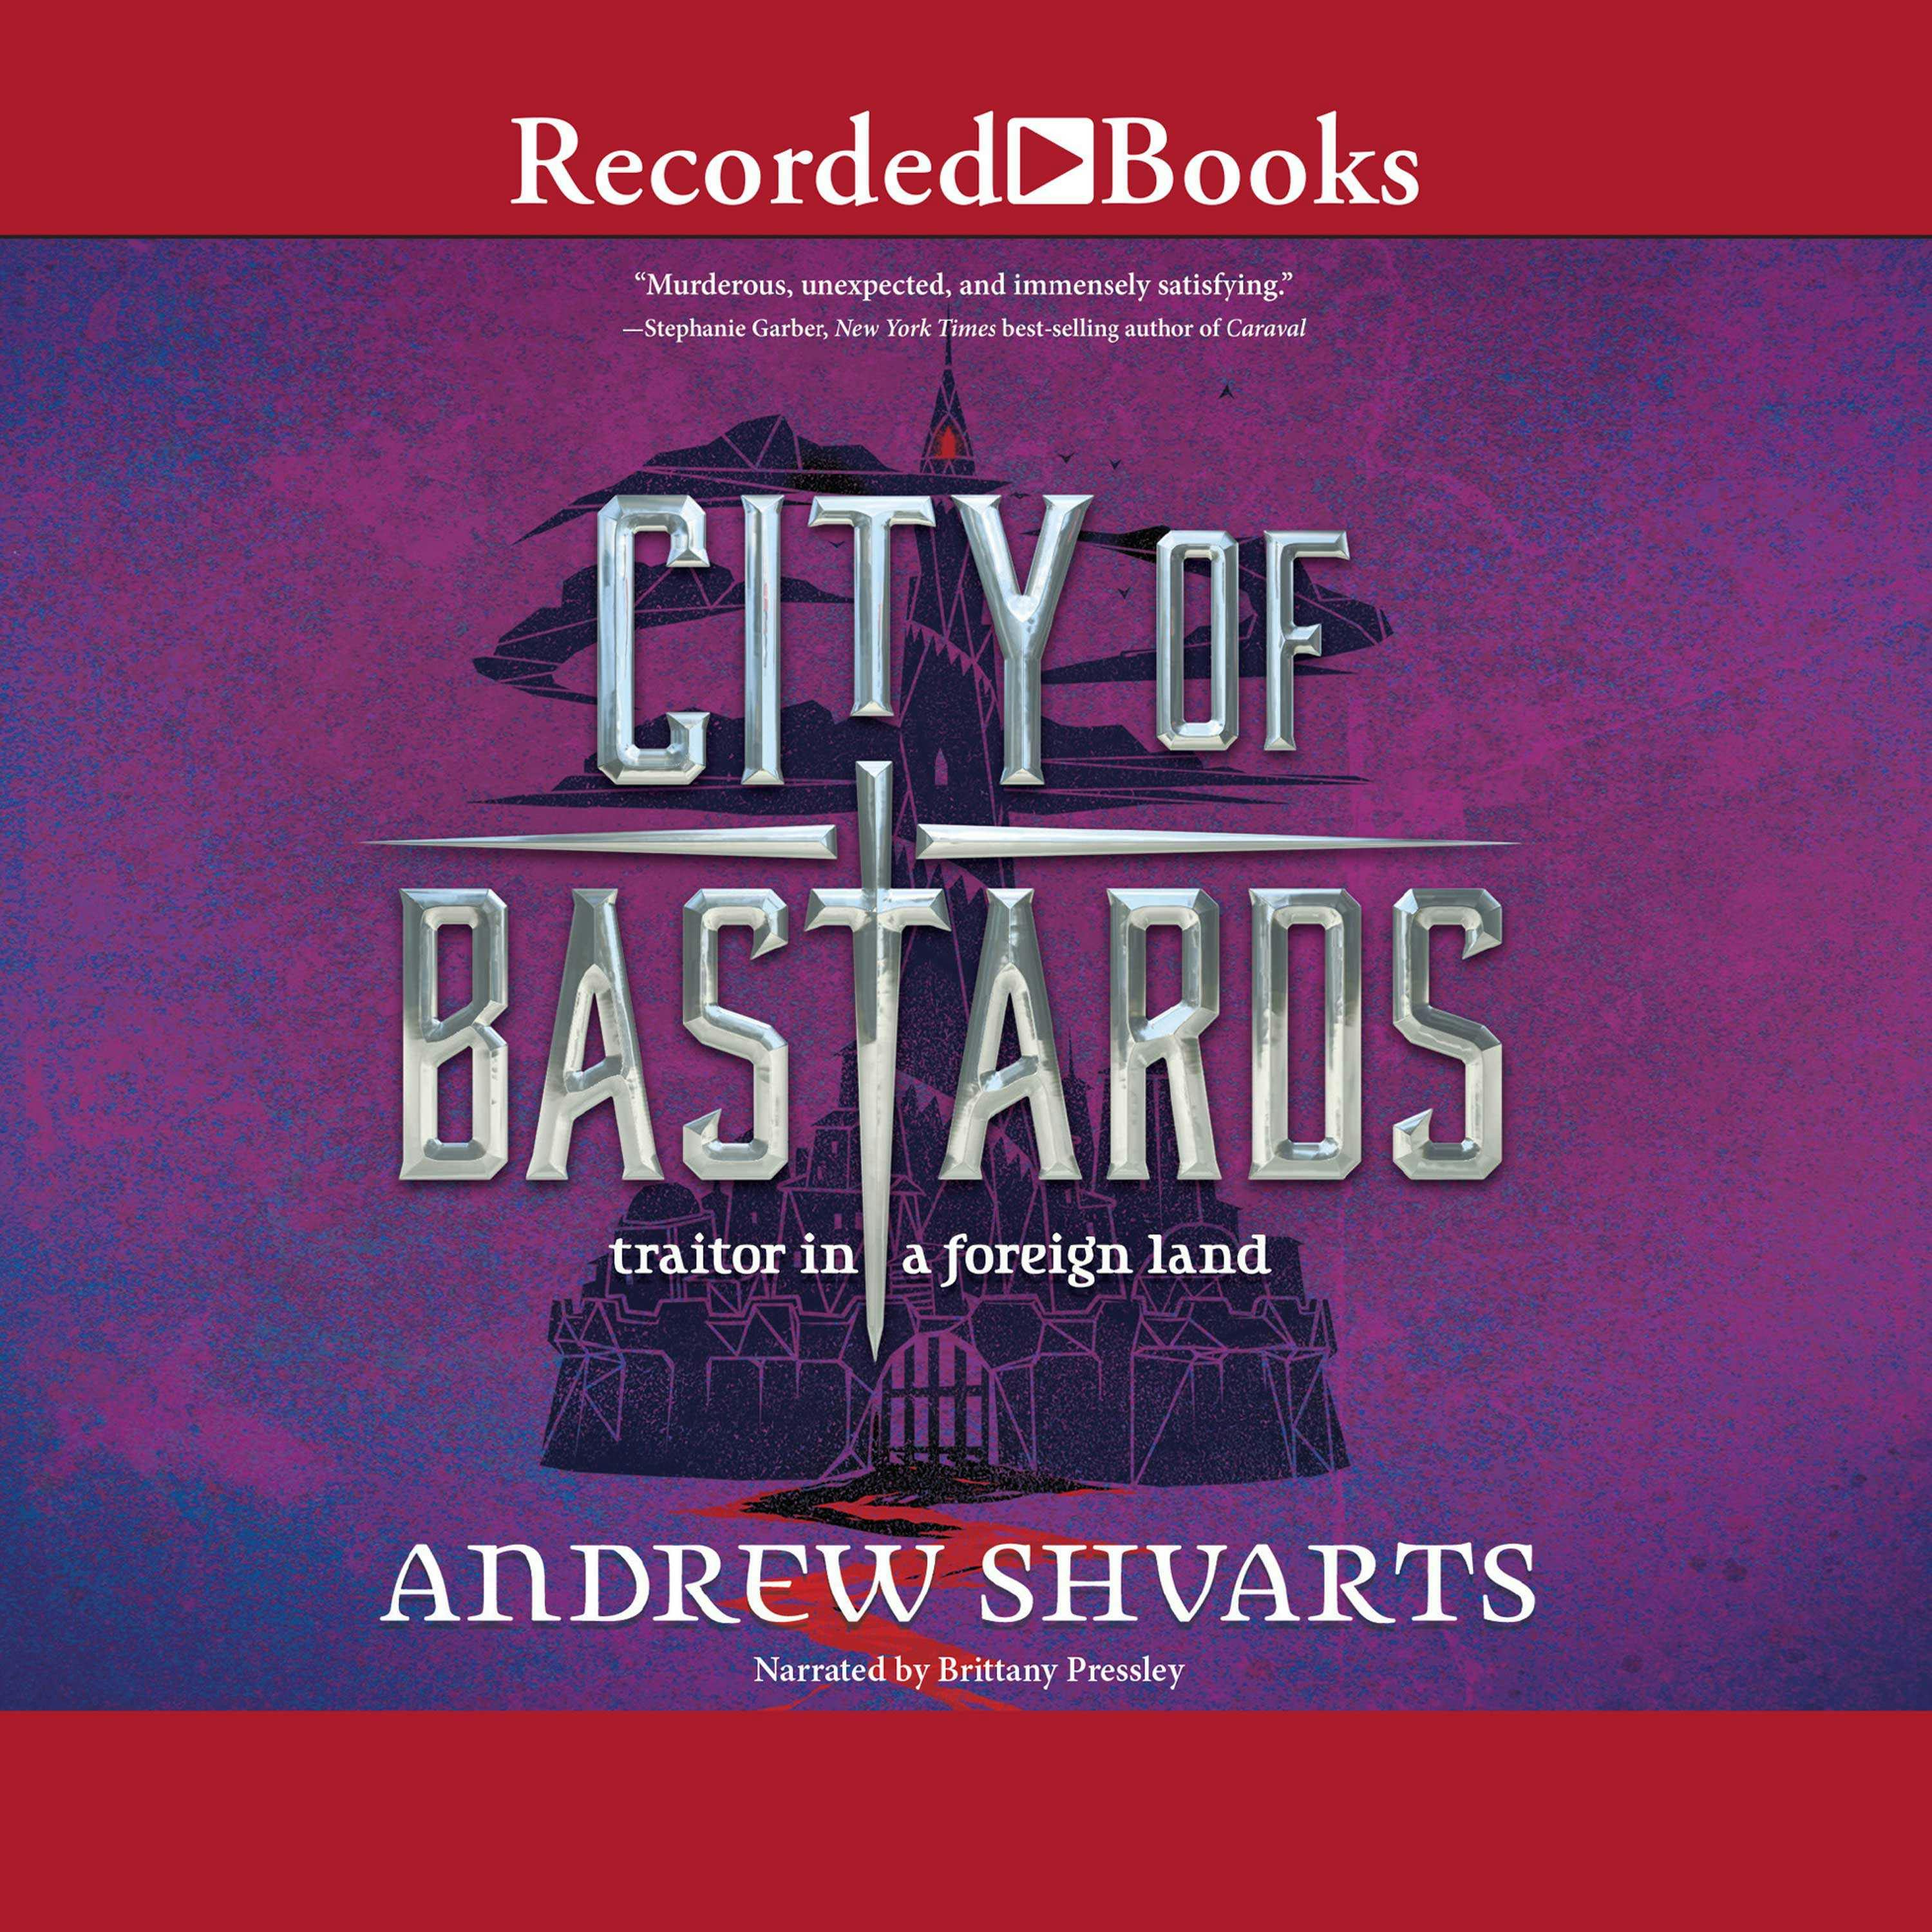 City of Bastards - Andrew Shvarts